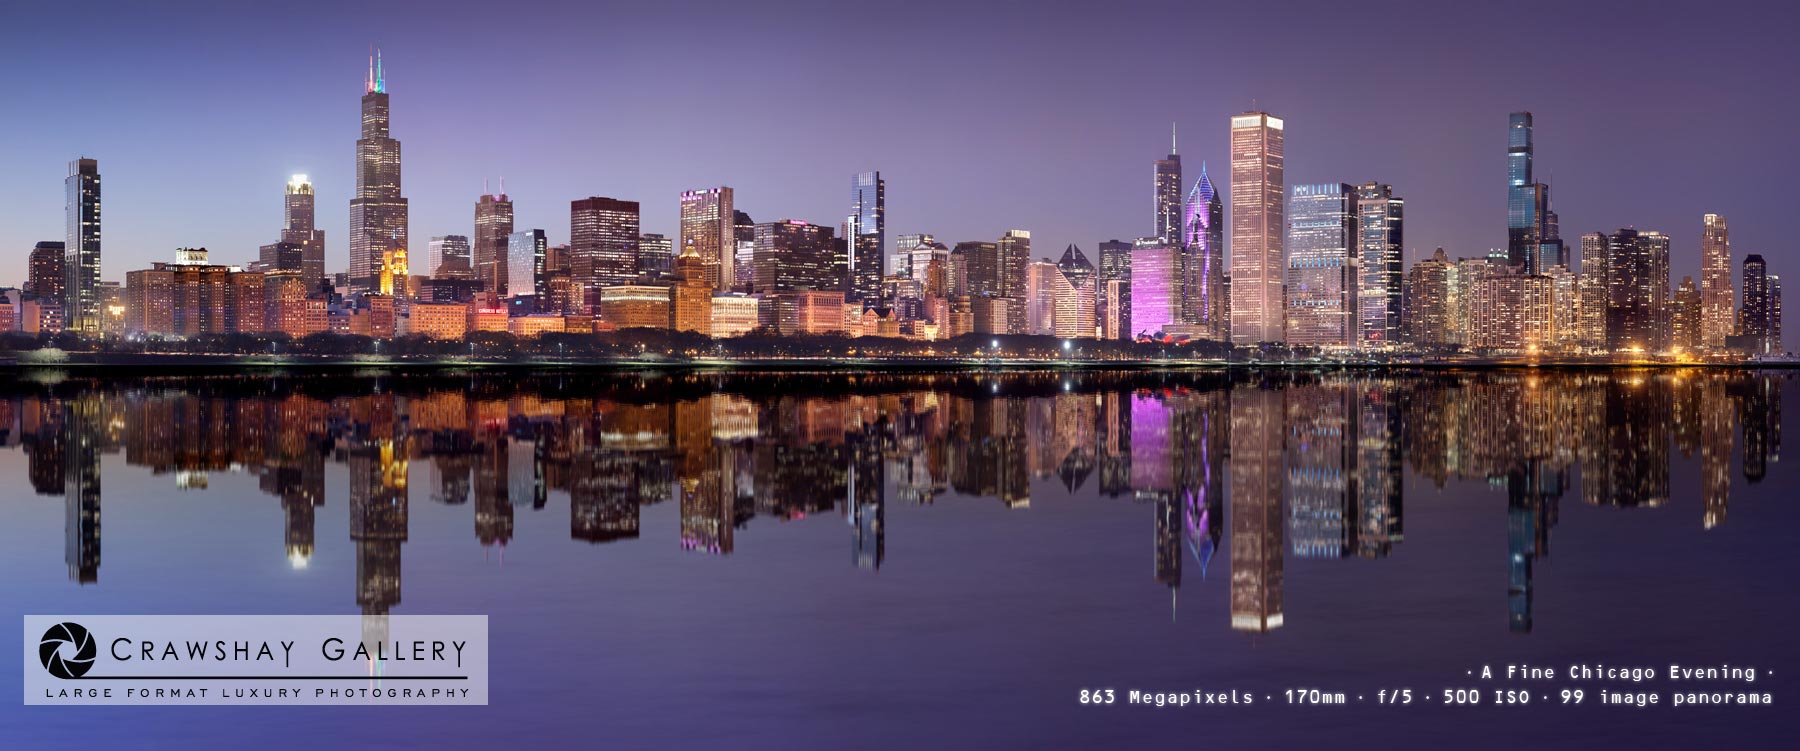 Image of Chicago Skyline at night